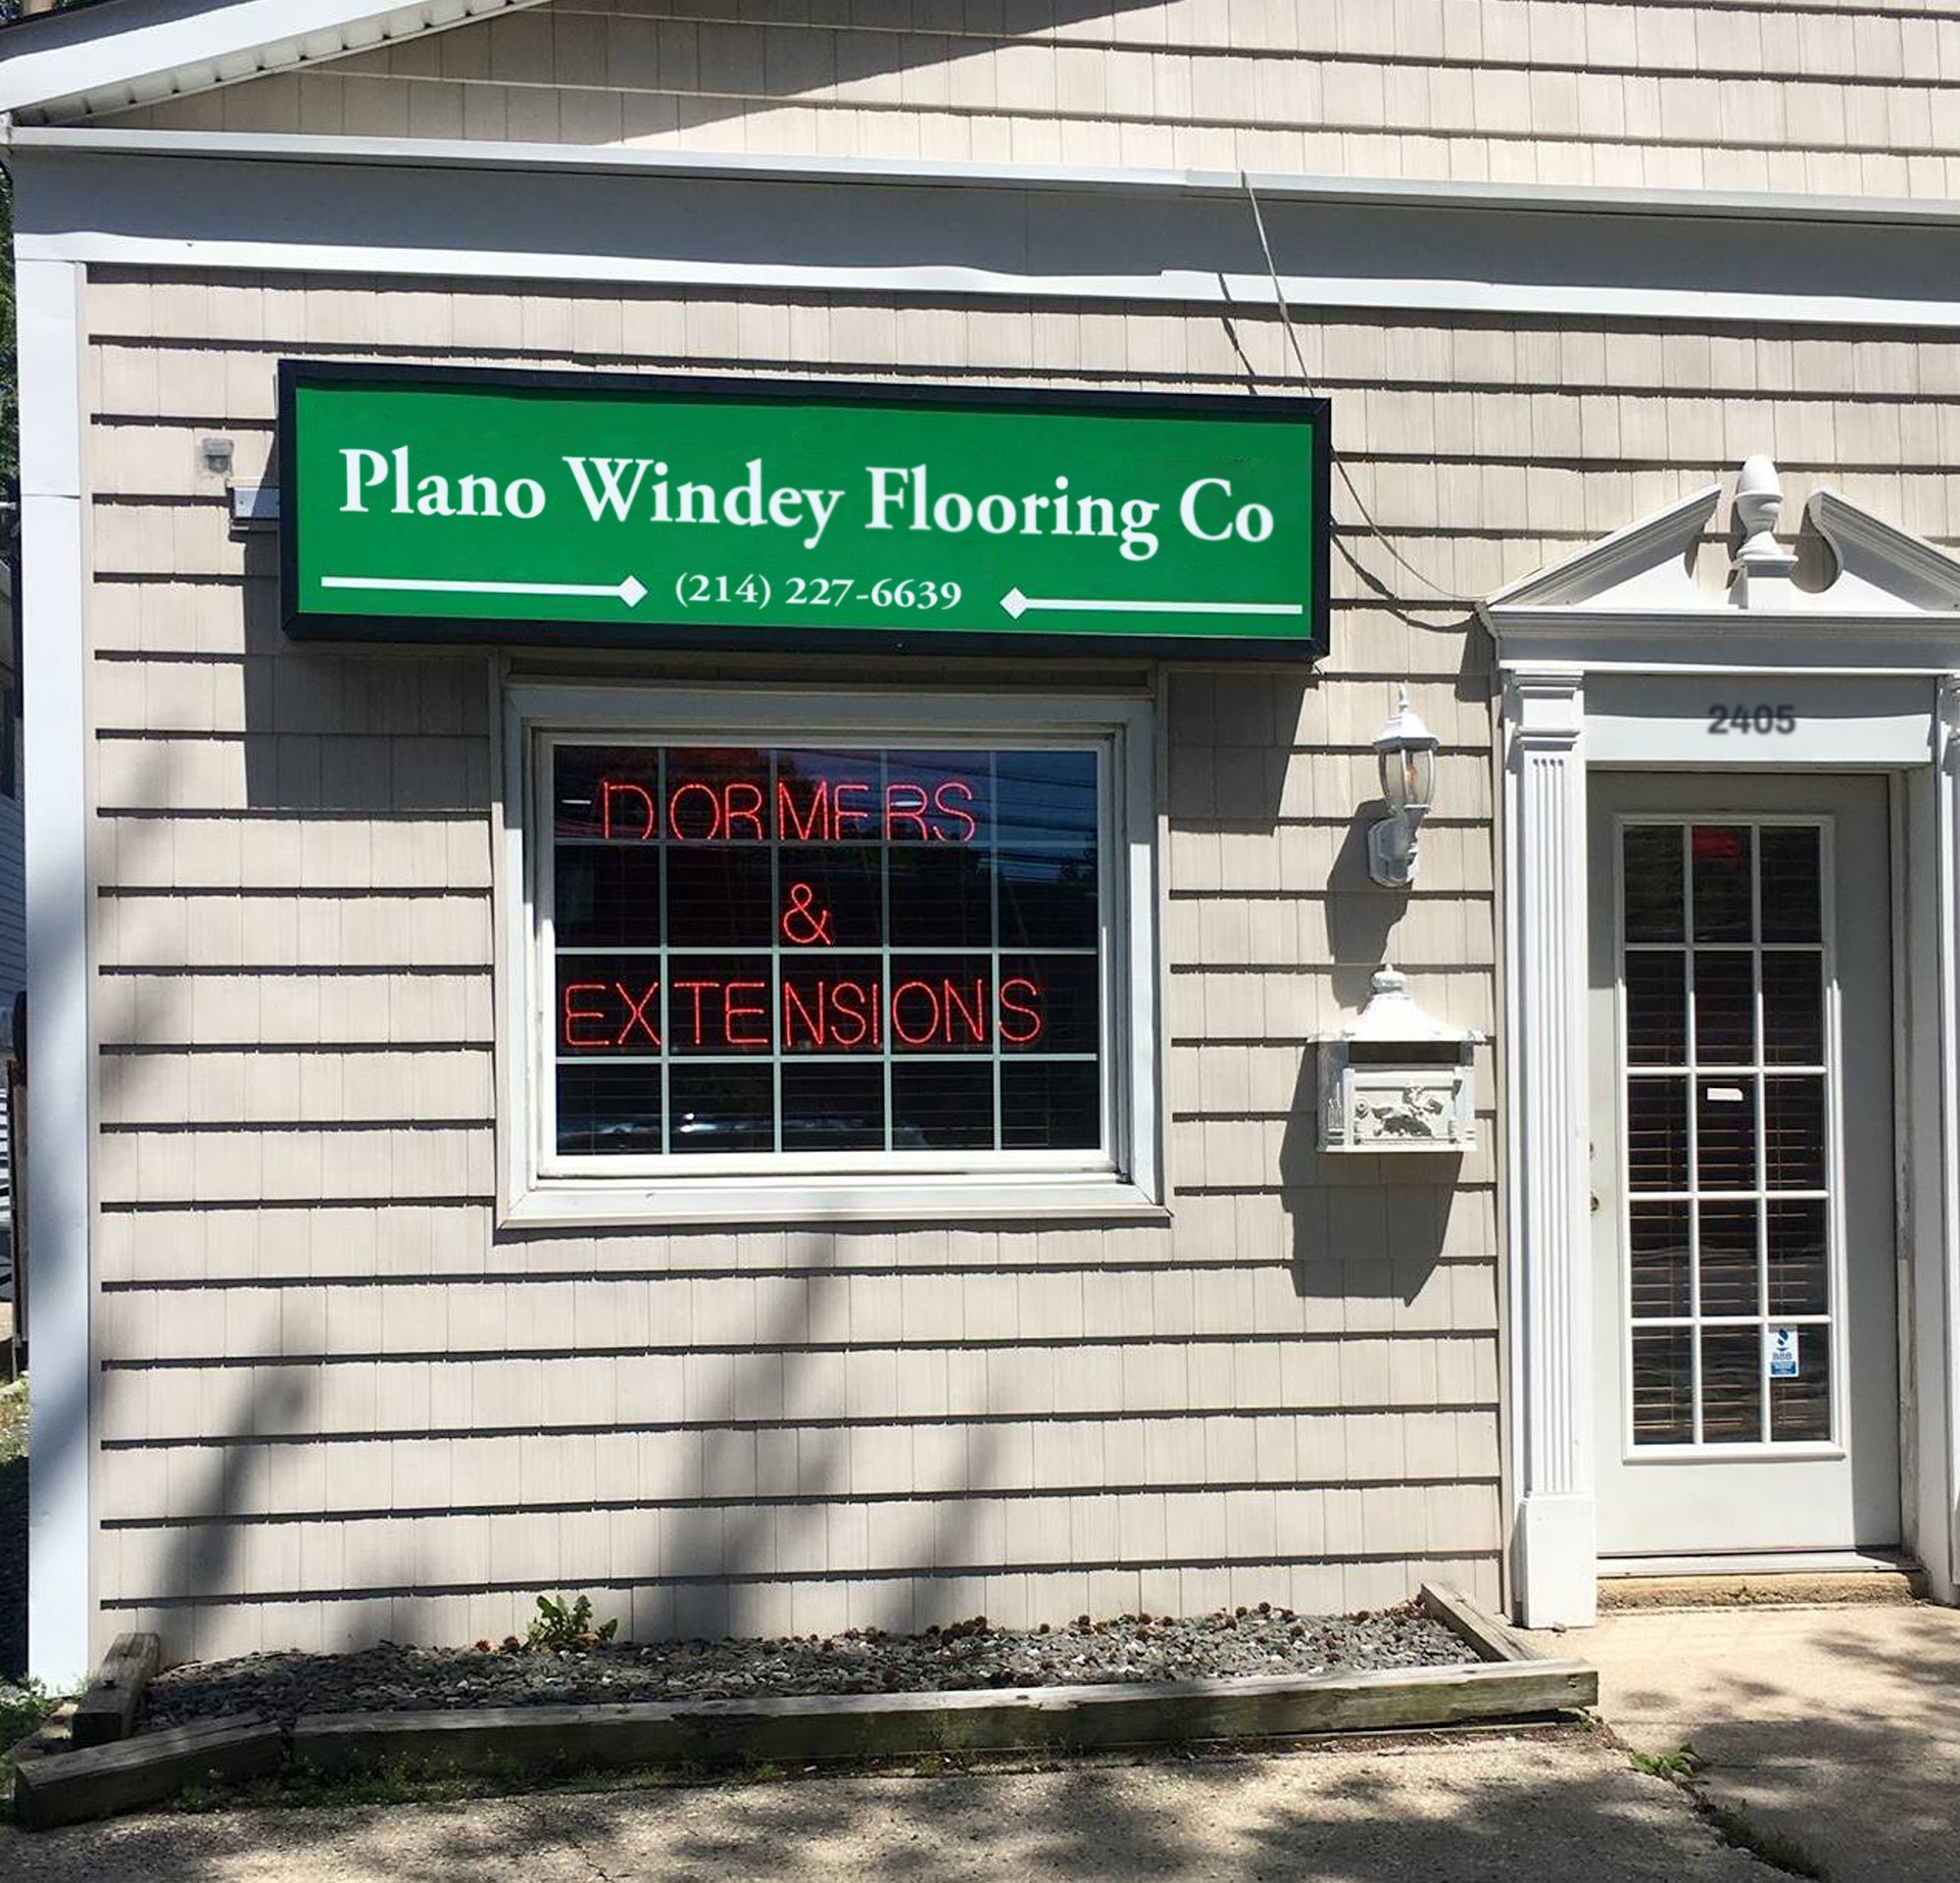 Plano Windey Flooring Co